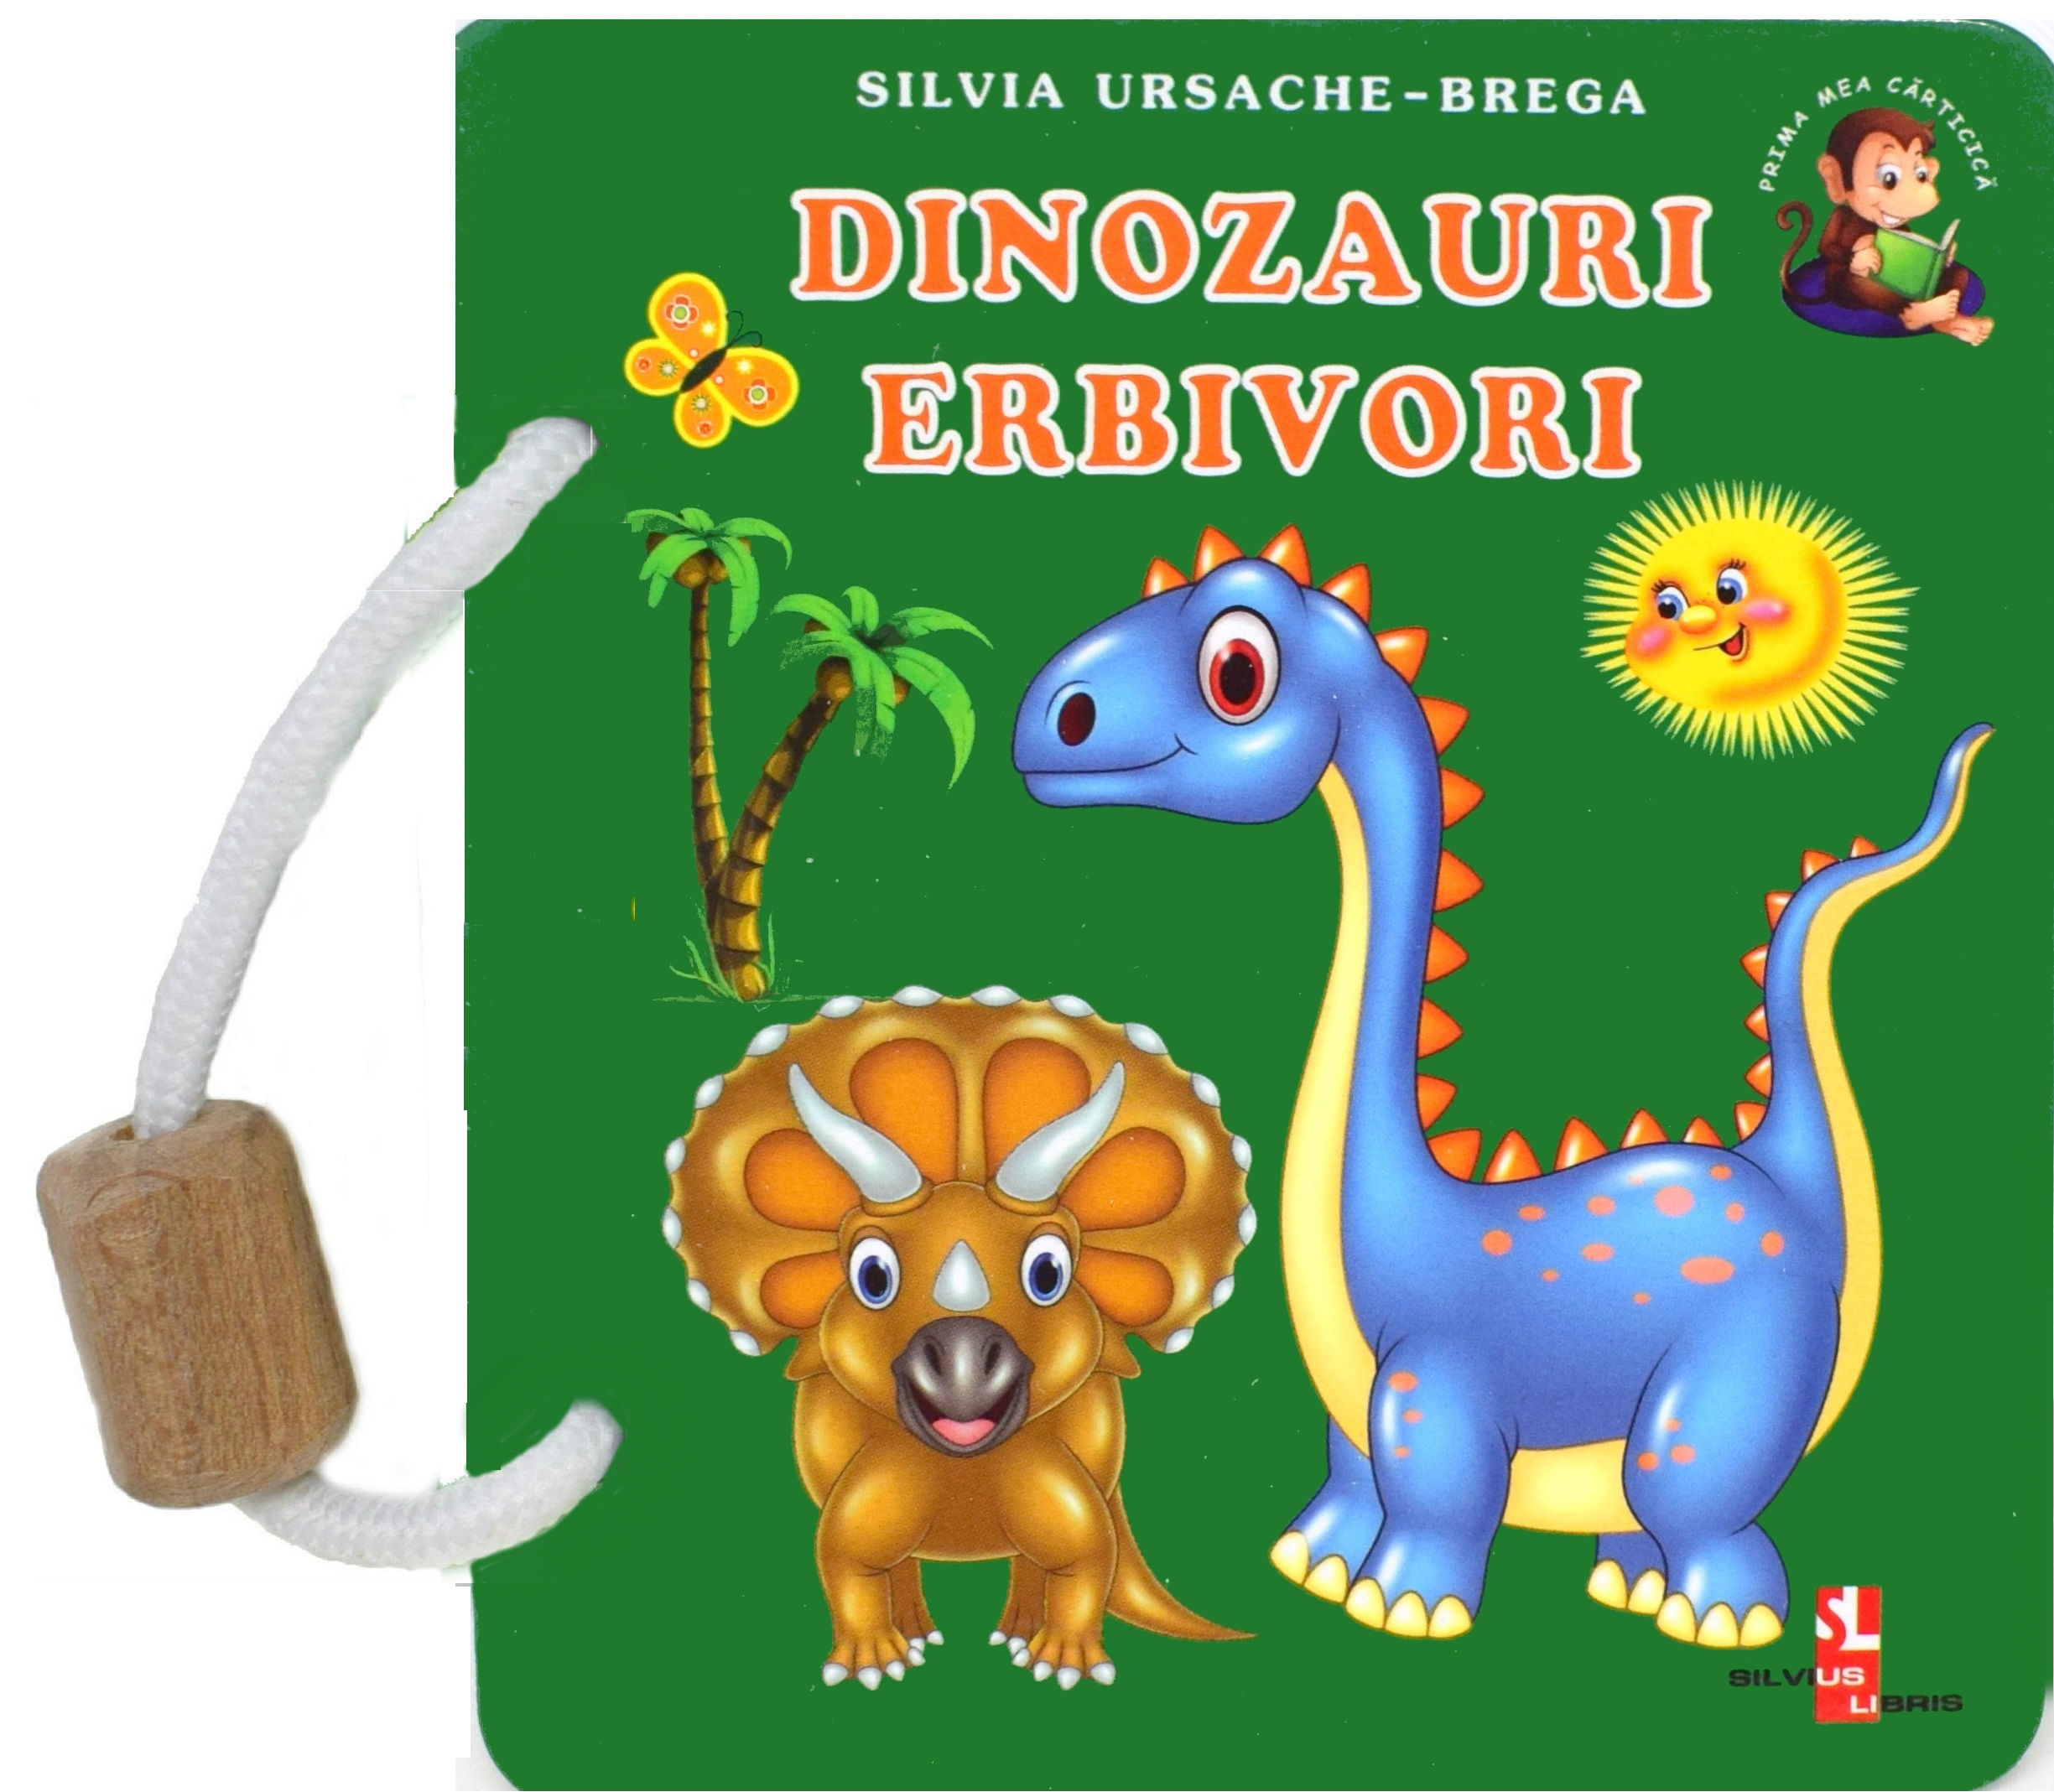 Dinozauri erbivori - Silvia Ursache-Brega